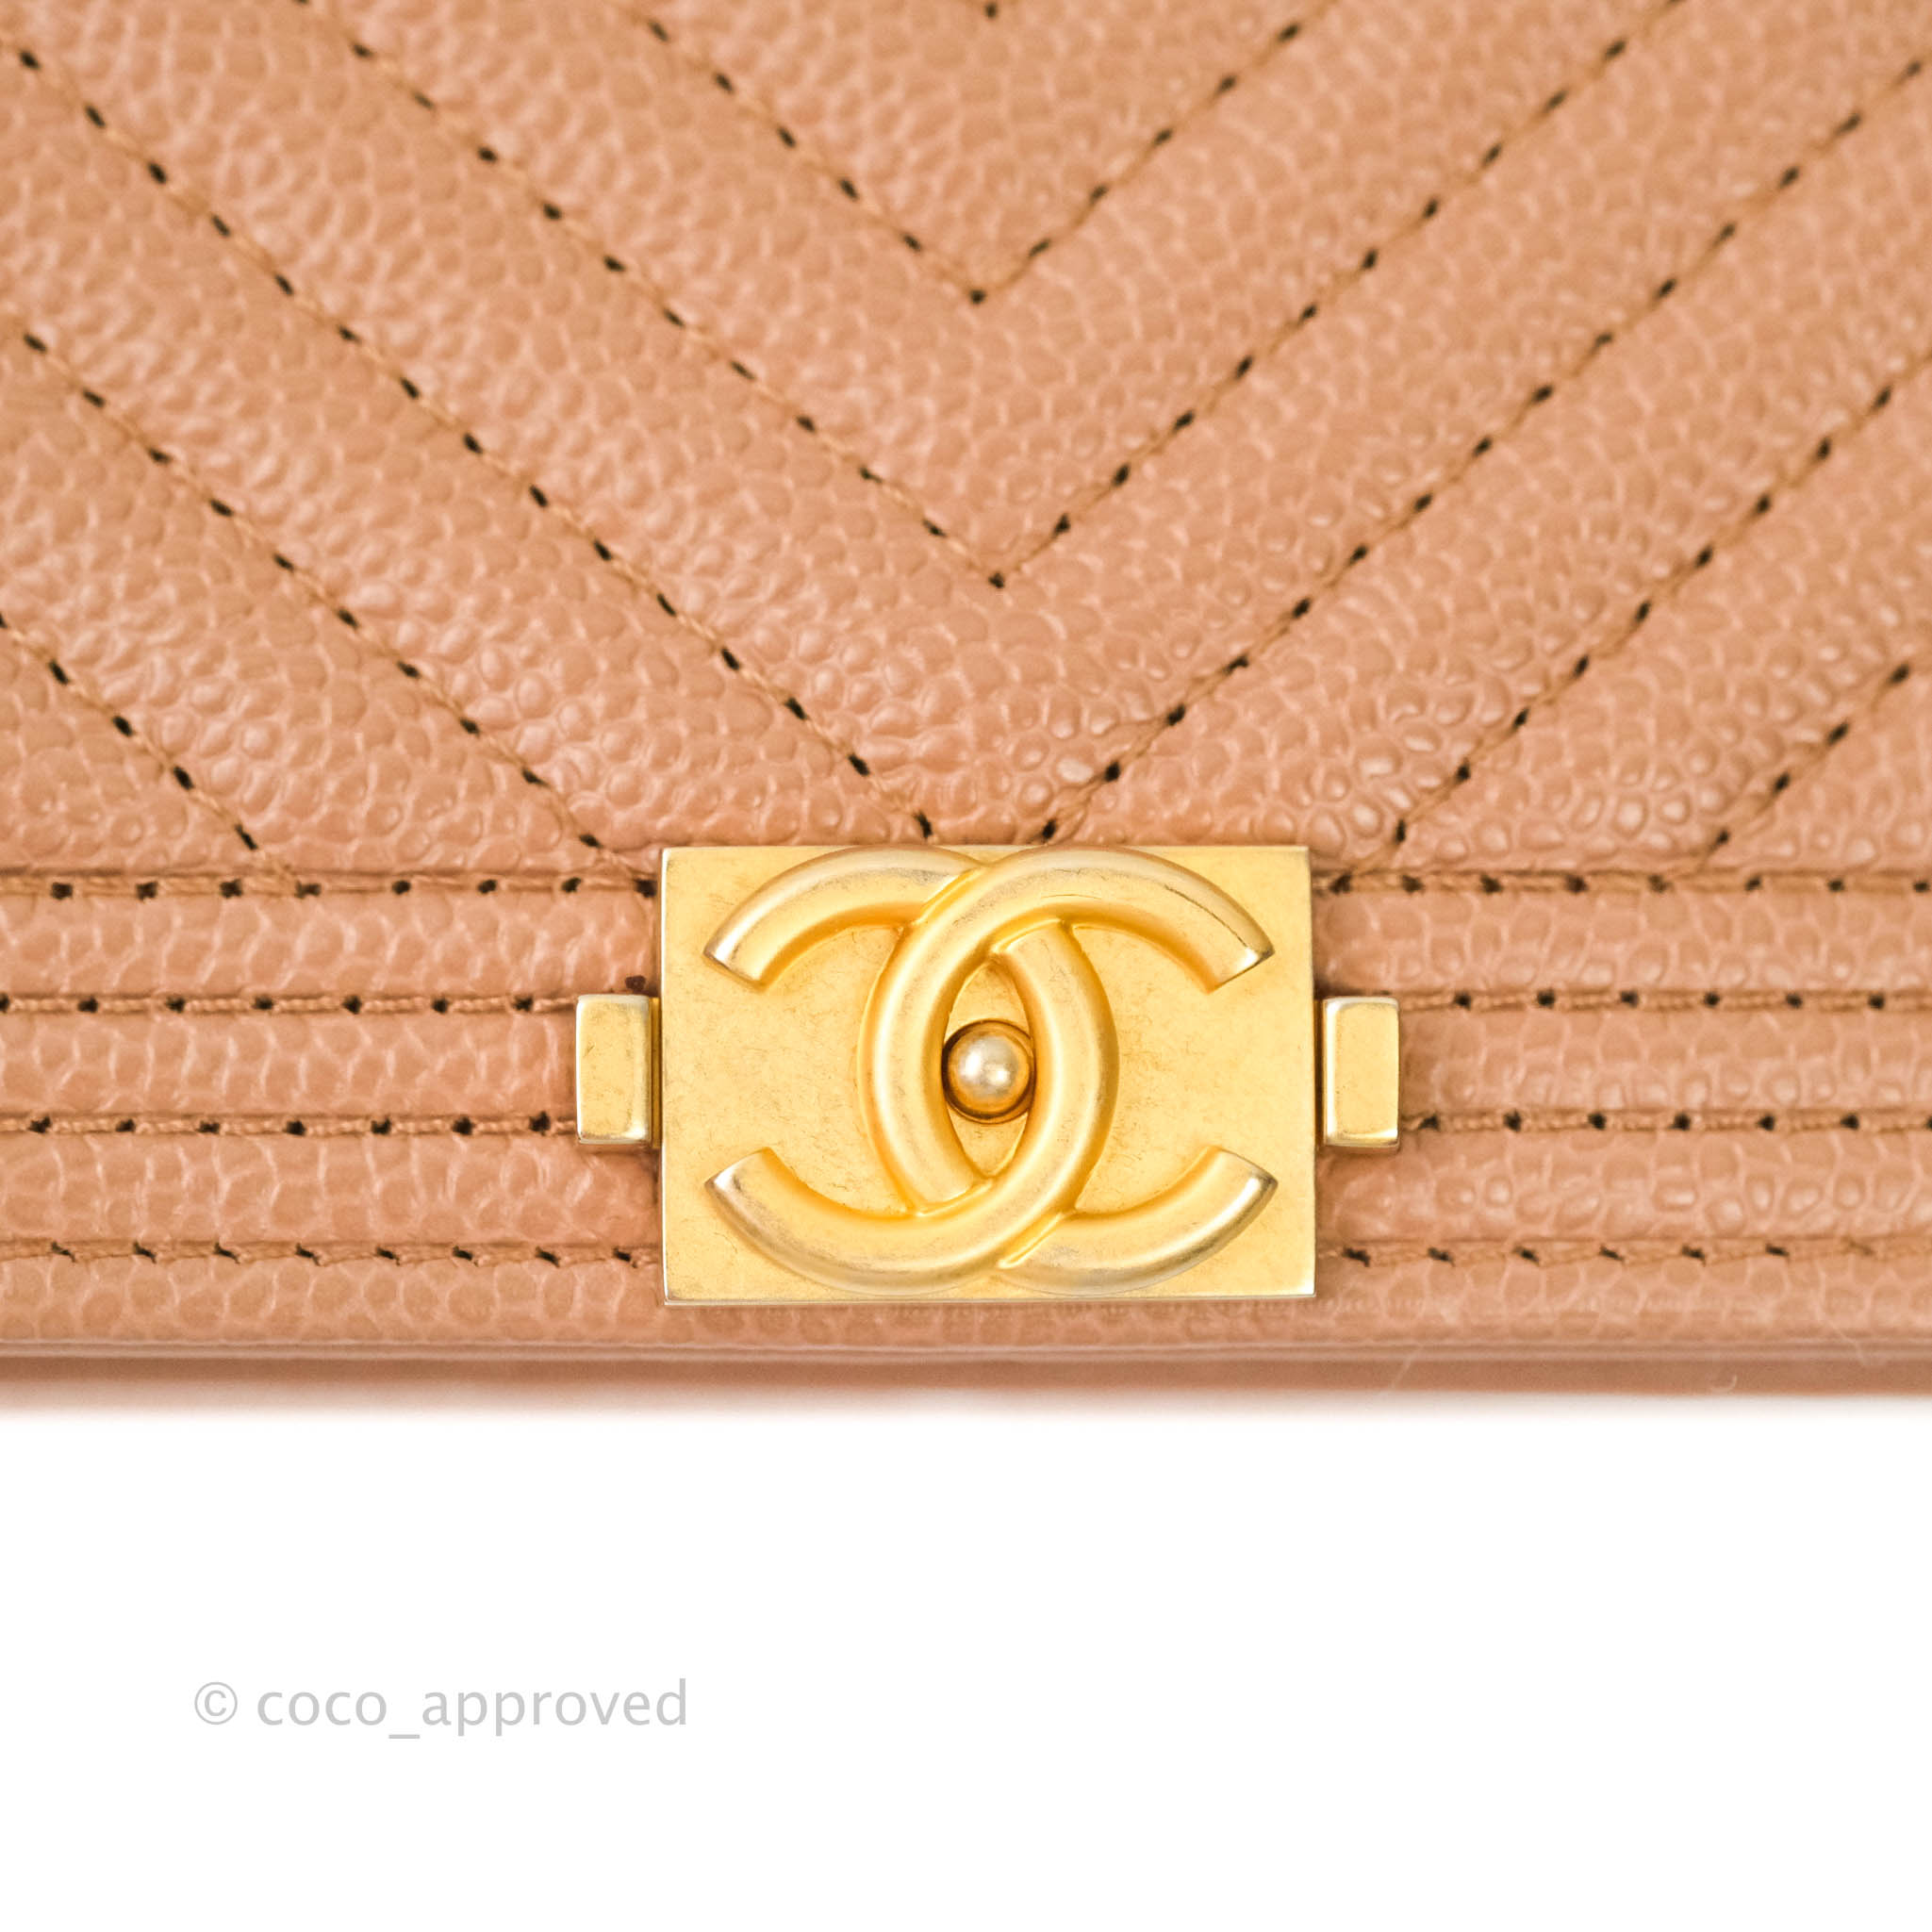 Chanel Beige Chevron Caviar Boy Compact Wallet Q6A4OR0FIB000